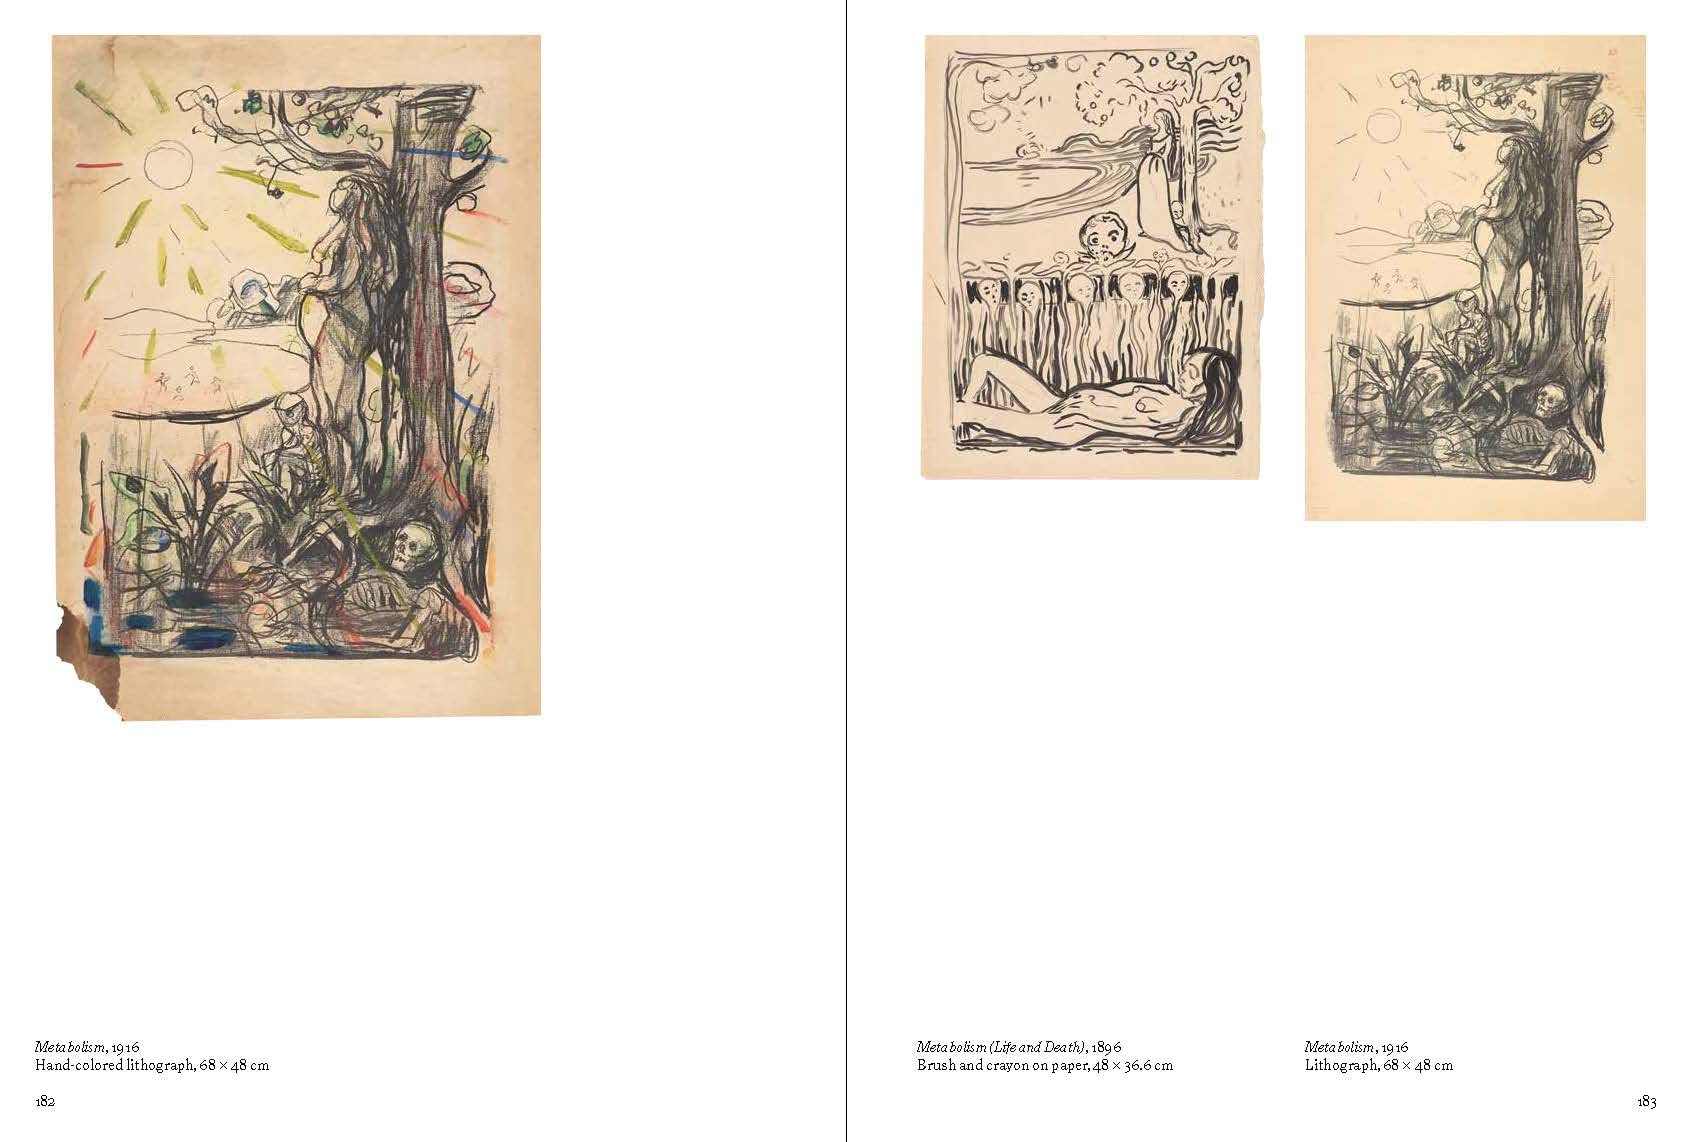 Edvard Munch: Trembling Earth